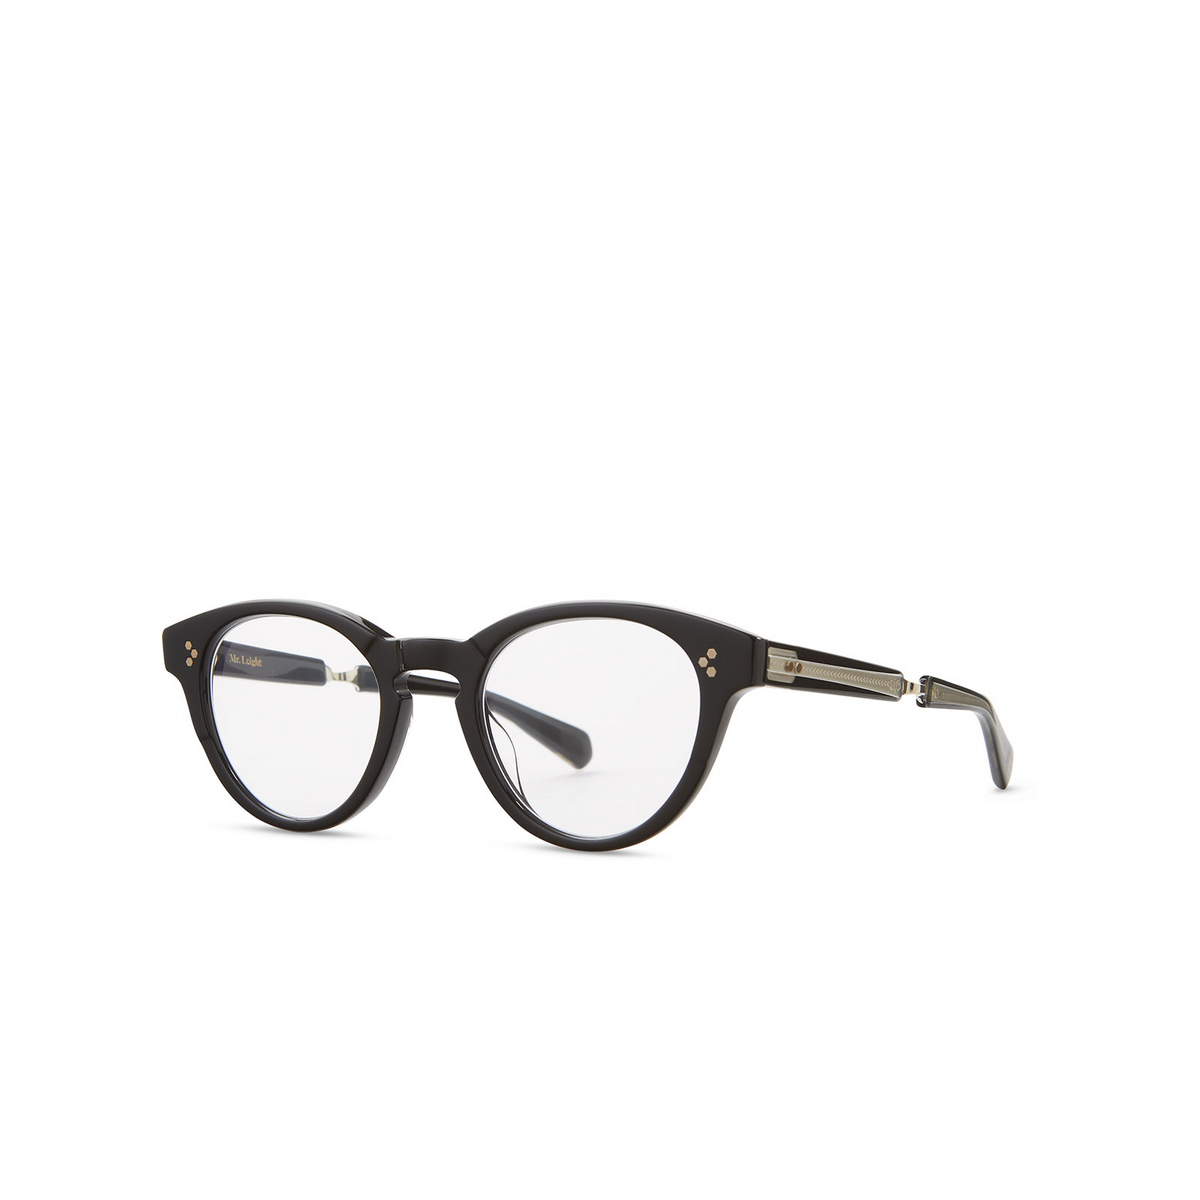 Mr. Leight AUDREY C Eyeglasses BK-12KG Black-12K White Gold - three-quarters view